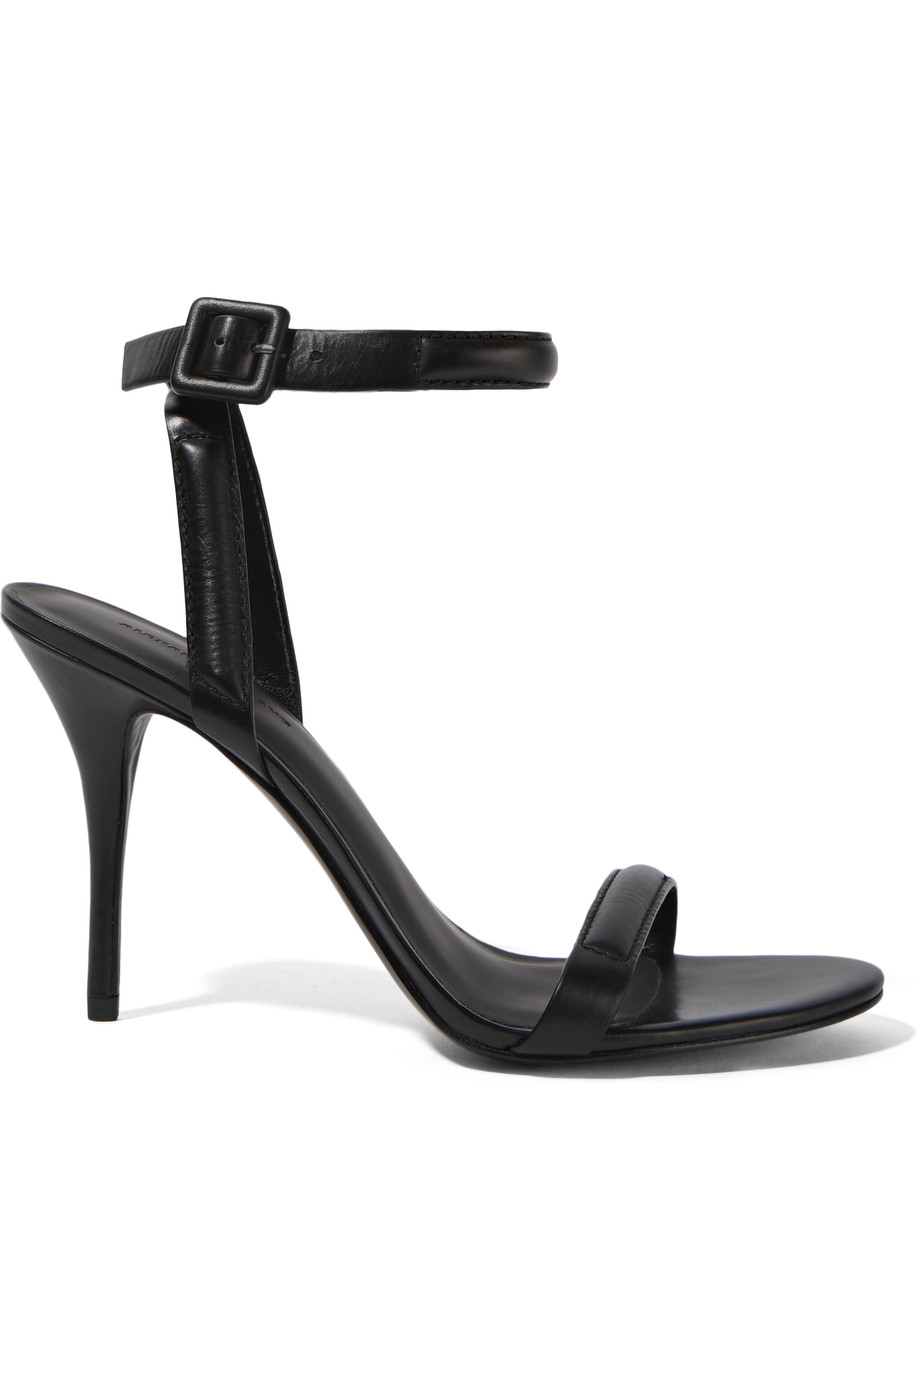 Alexander Wang Antonia Leather Sandals | ModeSens